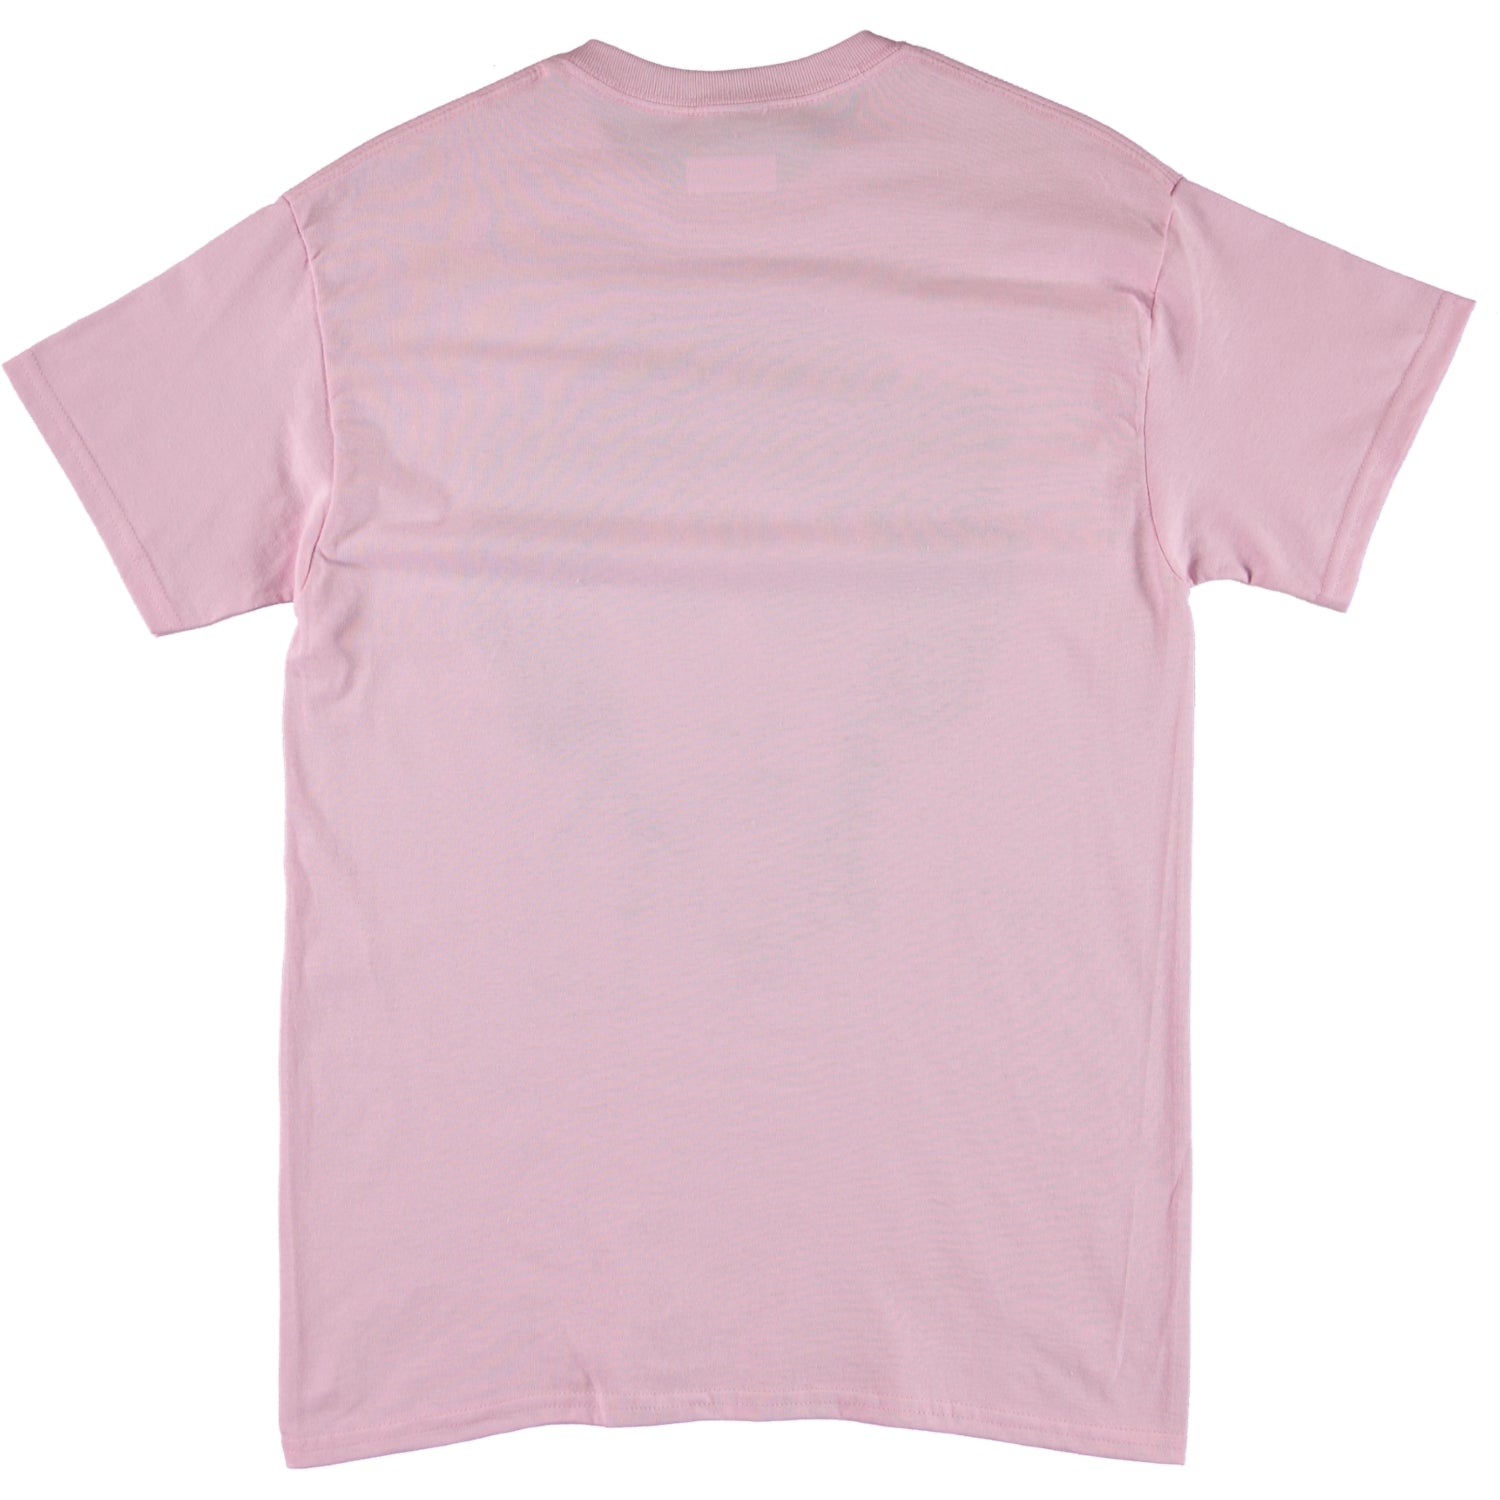 Stylecreep x Trafford Parsons Rebel, Rebel T-Shirt Pink